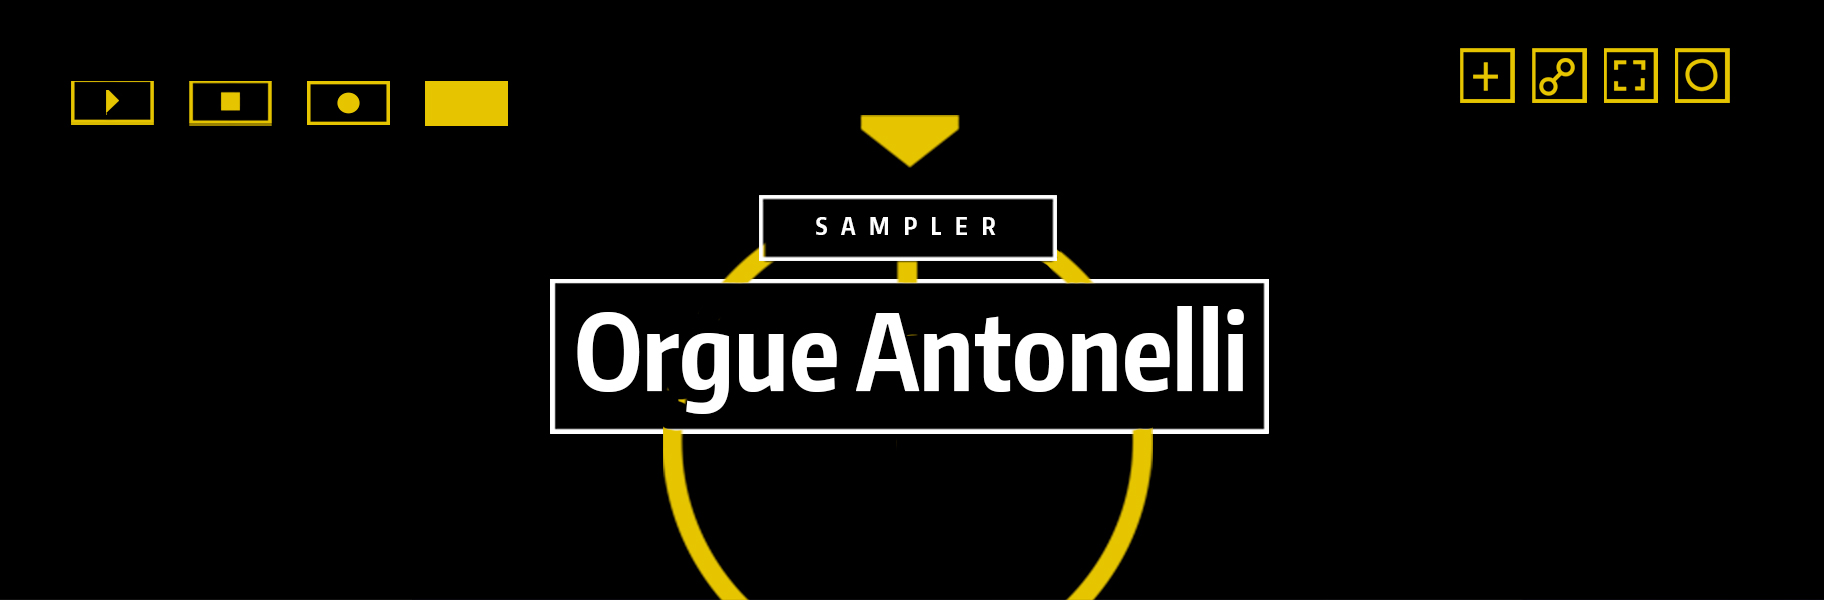 Sampler Instruments #5 - Orgue Antonelli